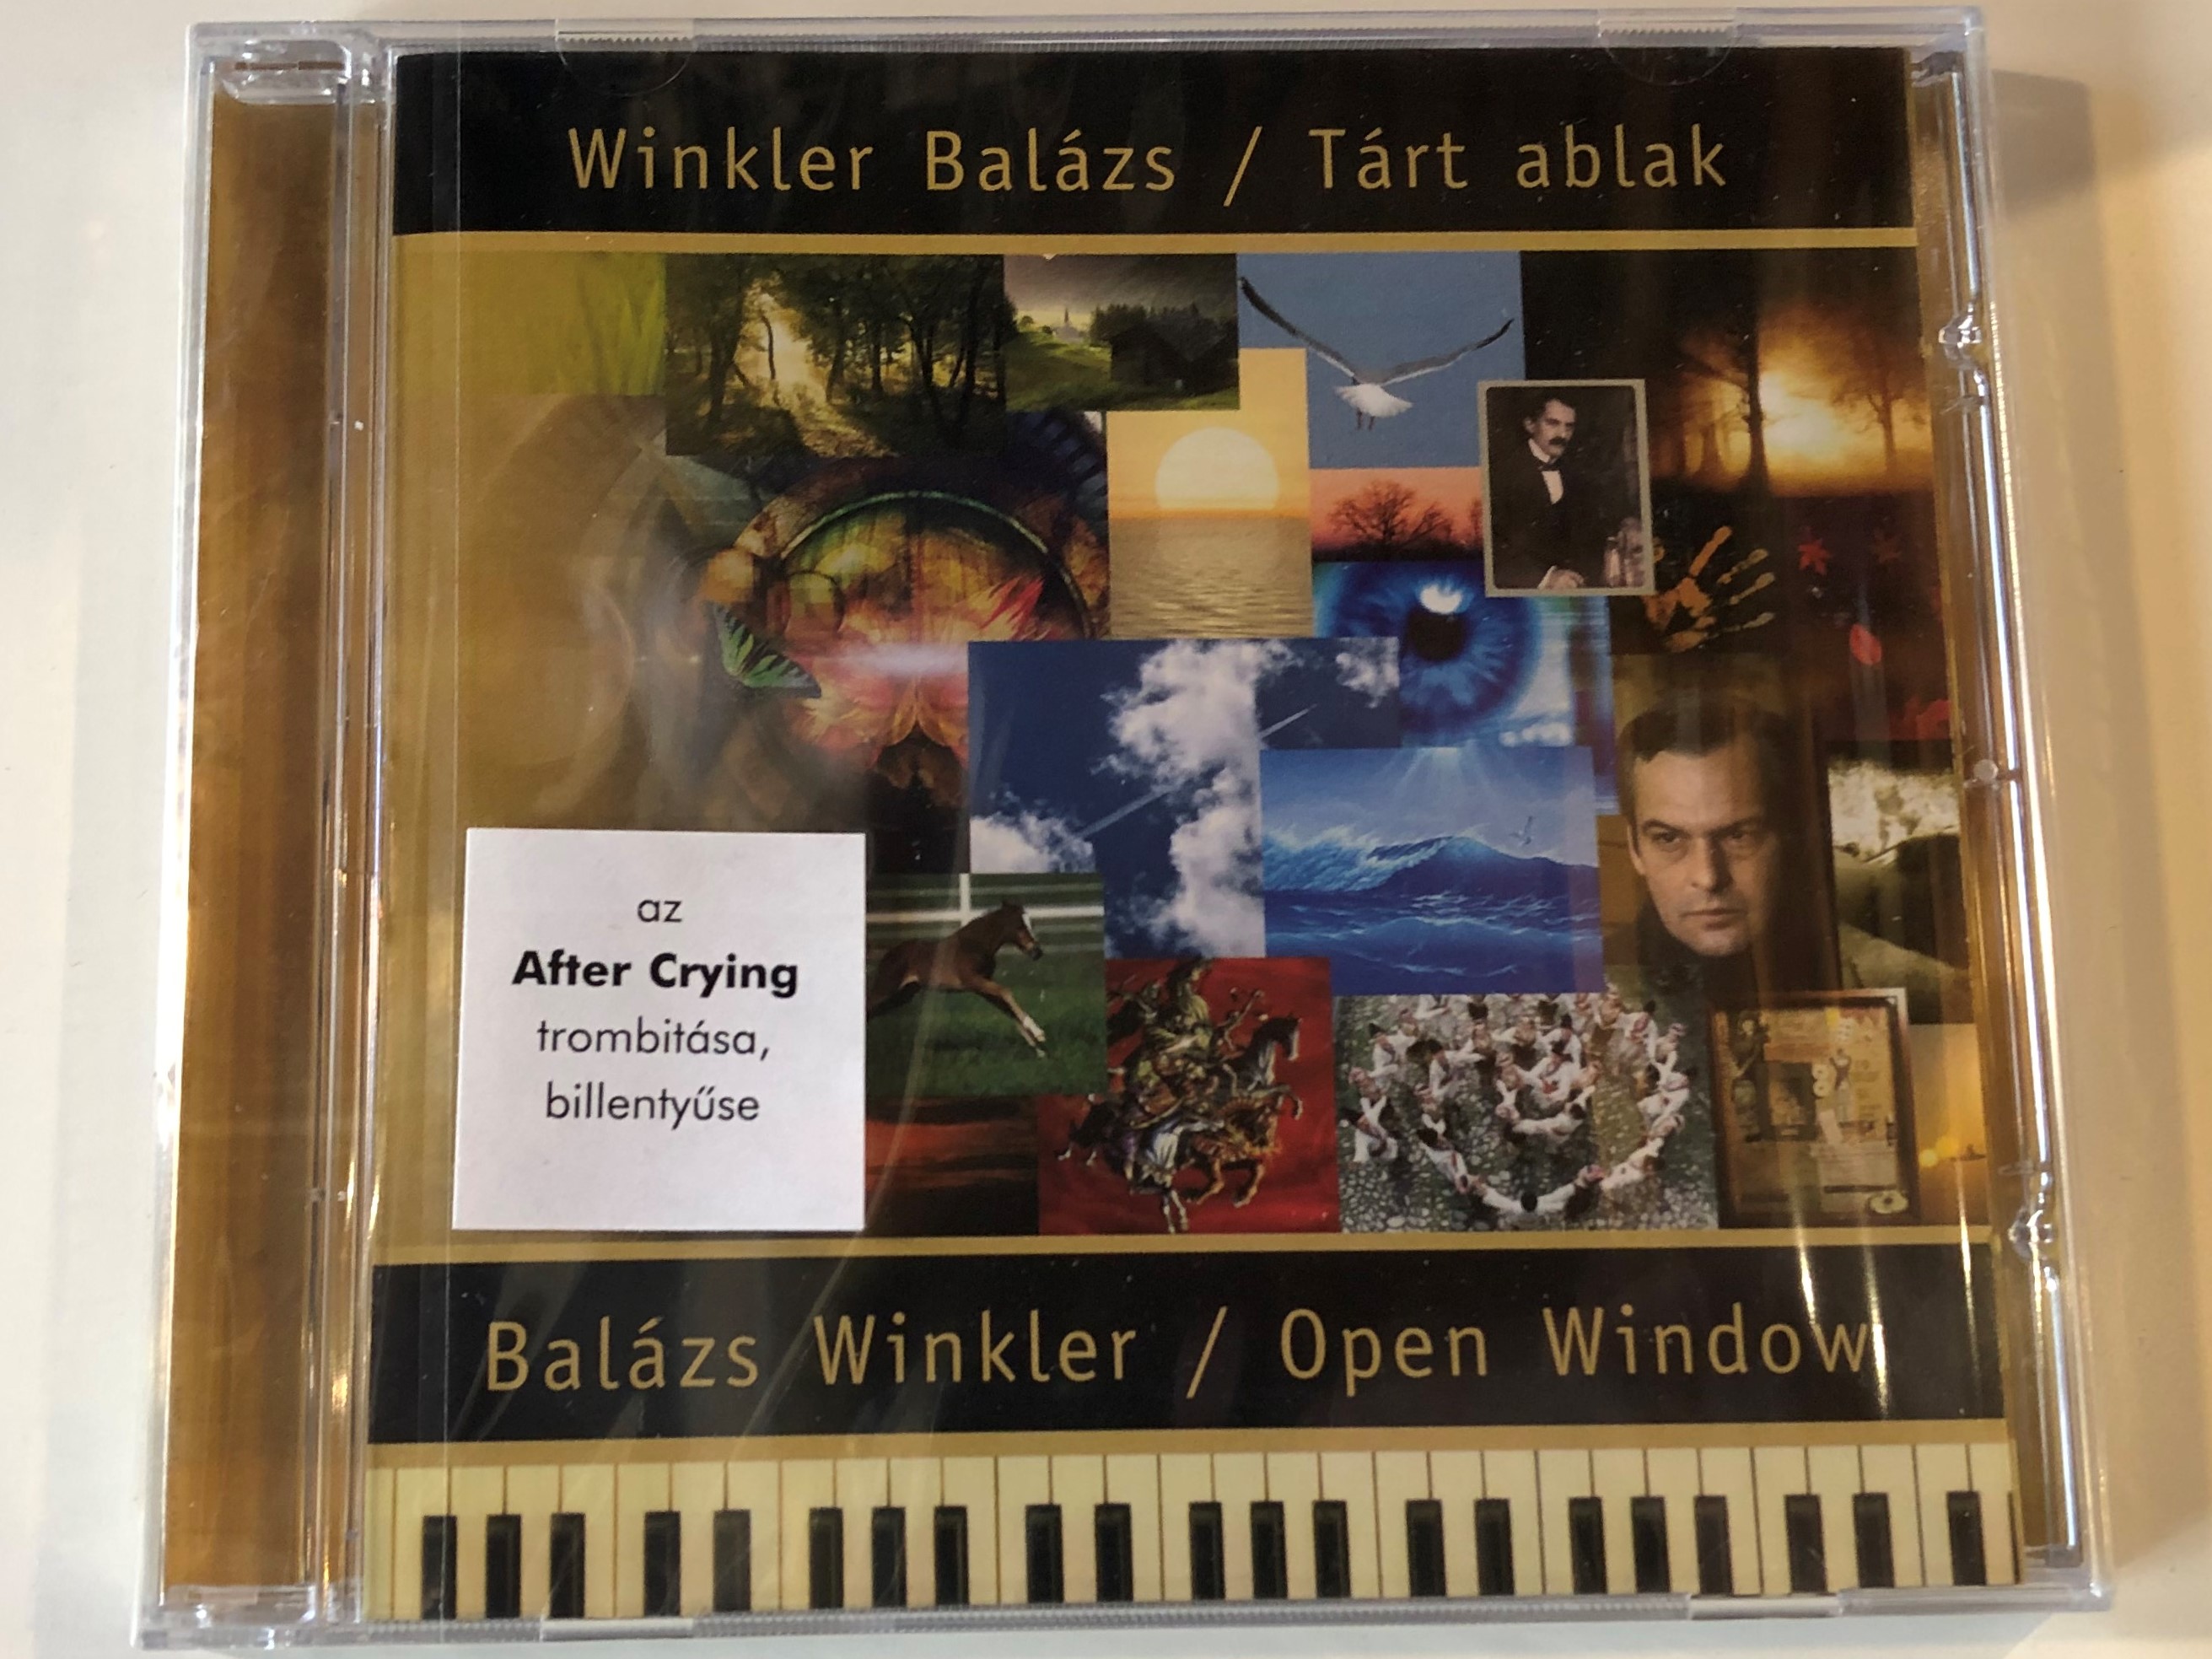 winkler-bal-zs-t-rt-ablak-open-window-periferic-records-audio-cd-2007-bgcd-185-1-.jpg